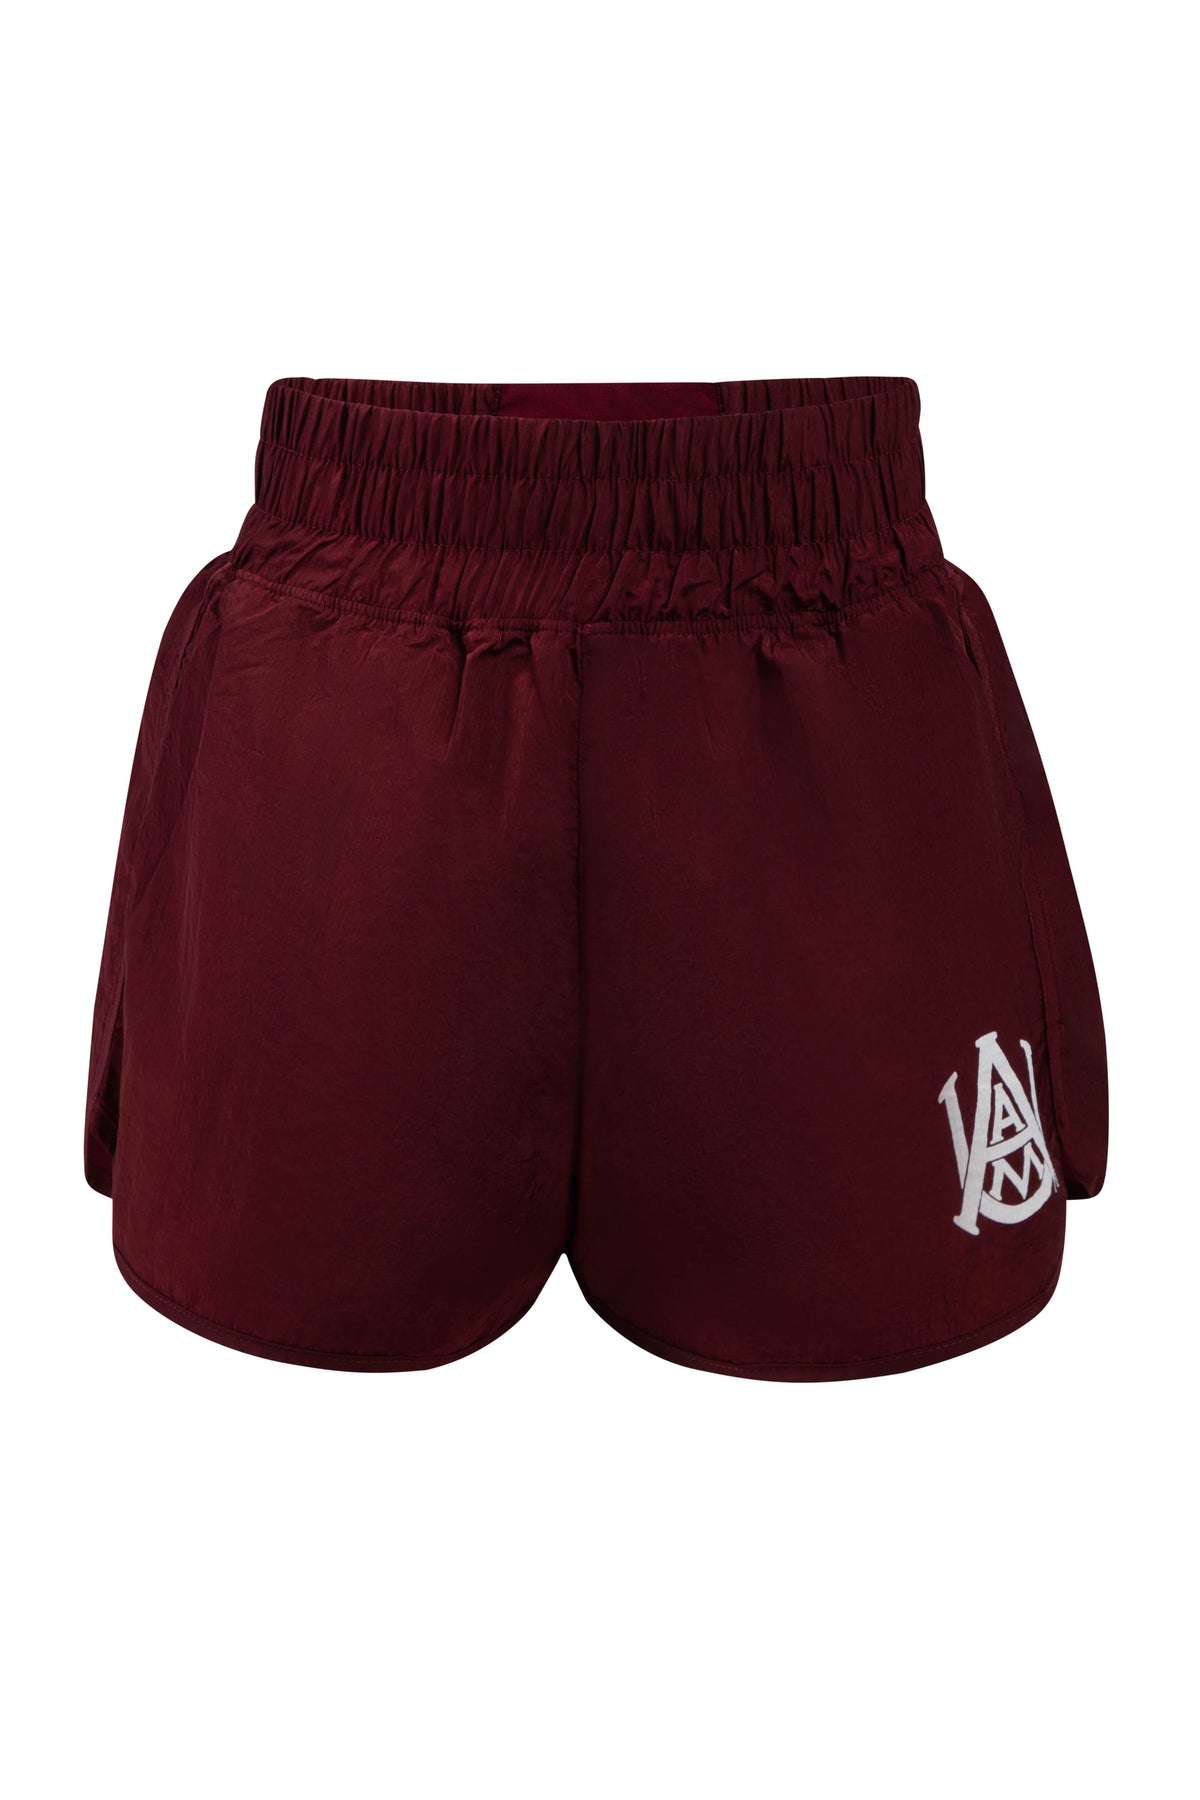 Alabama A&M University Boxer Shorts